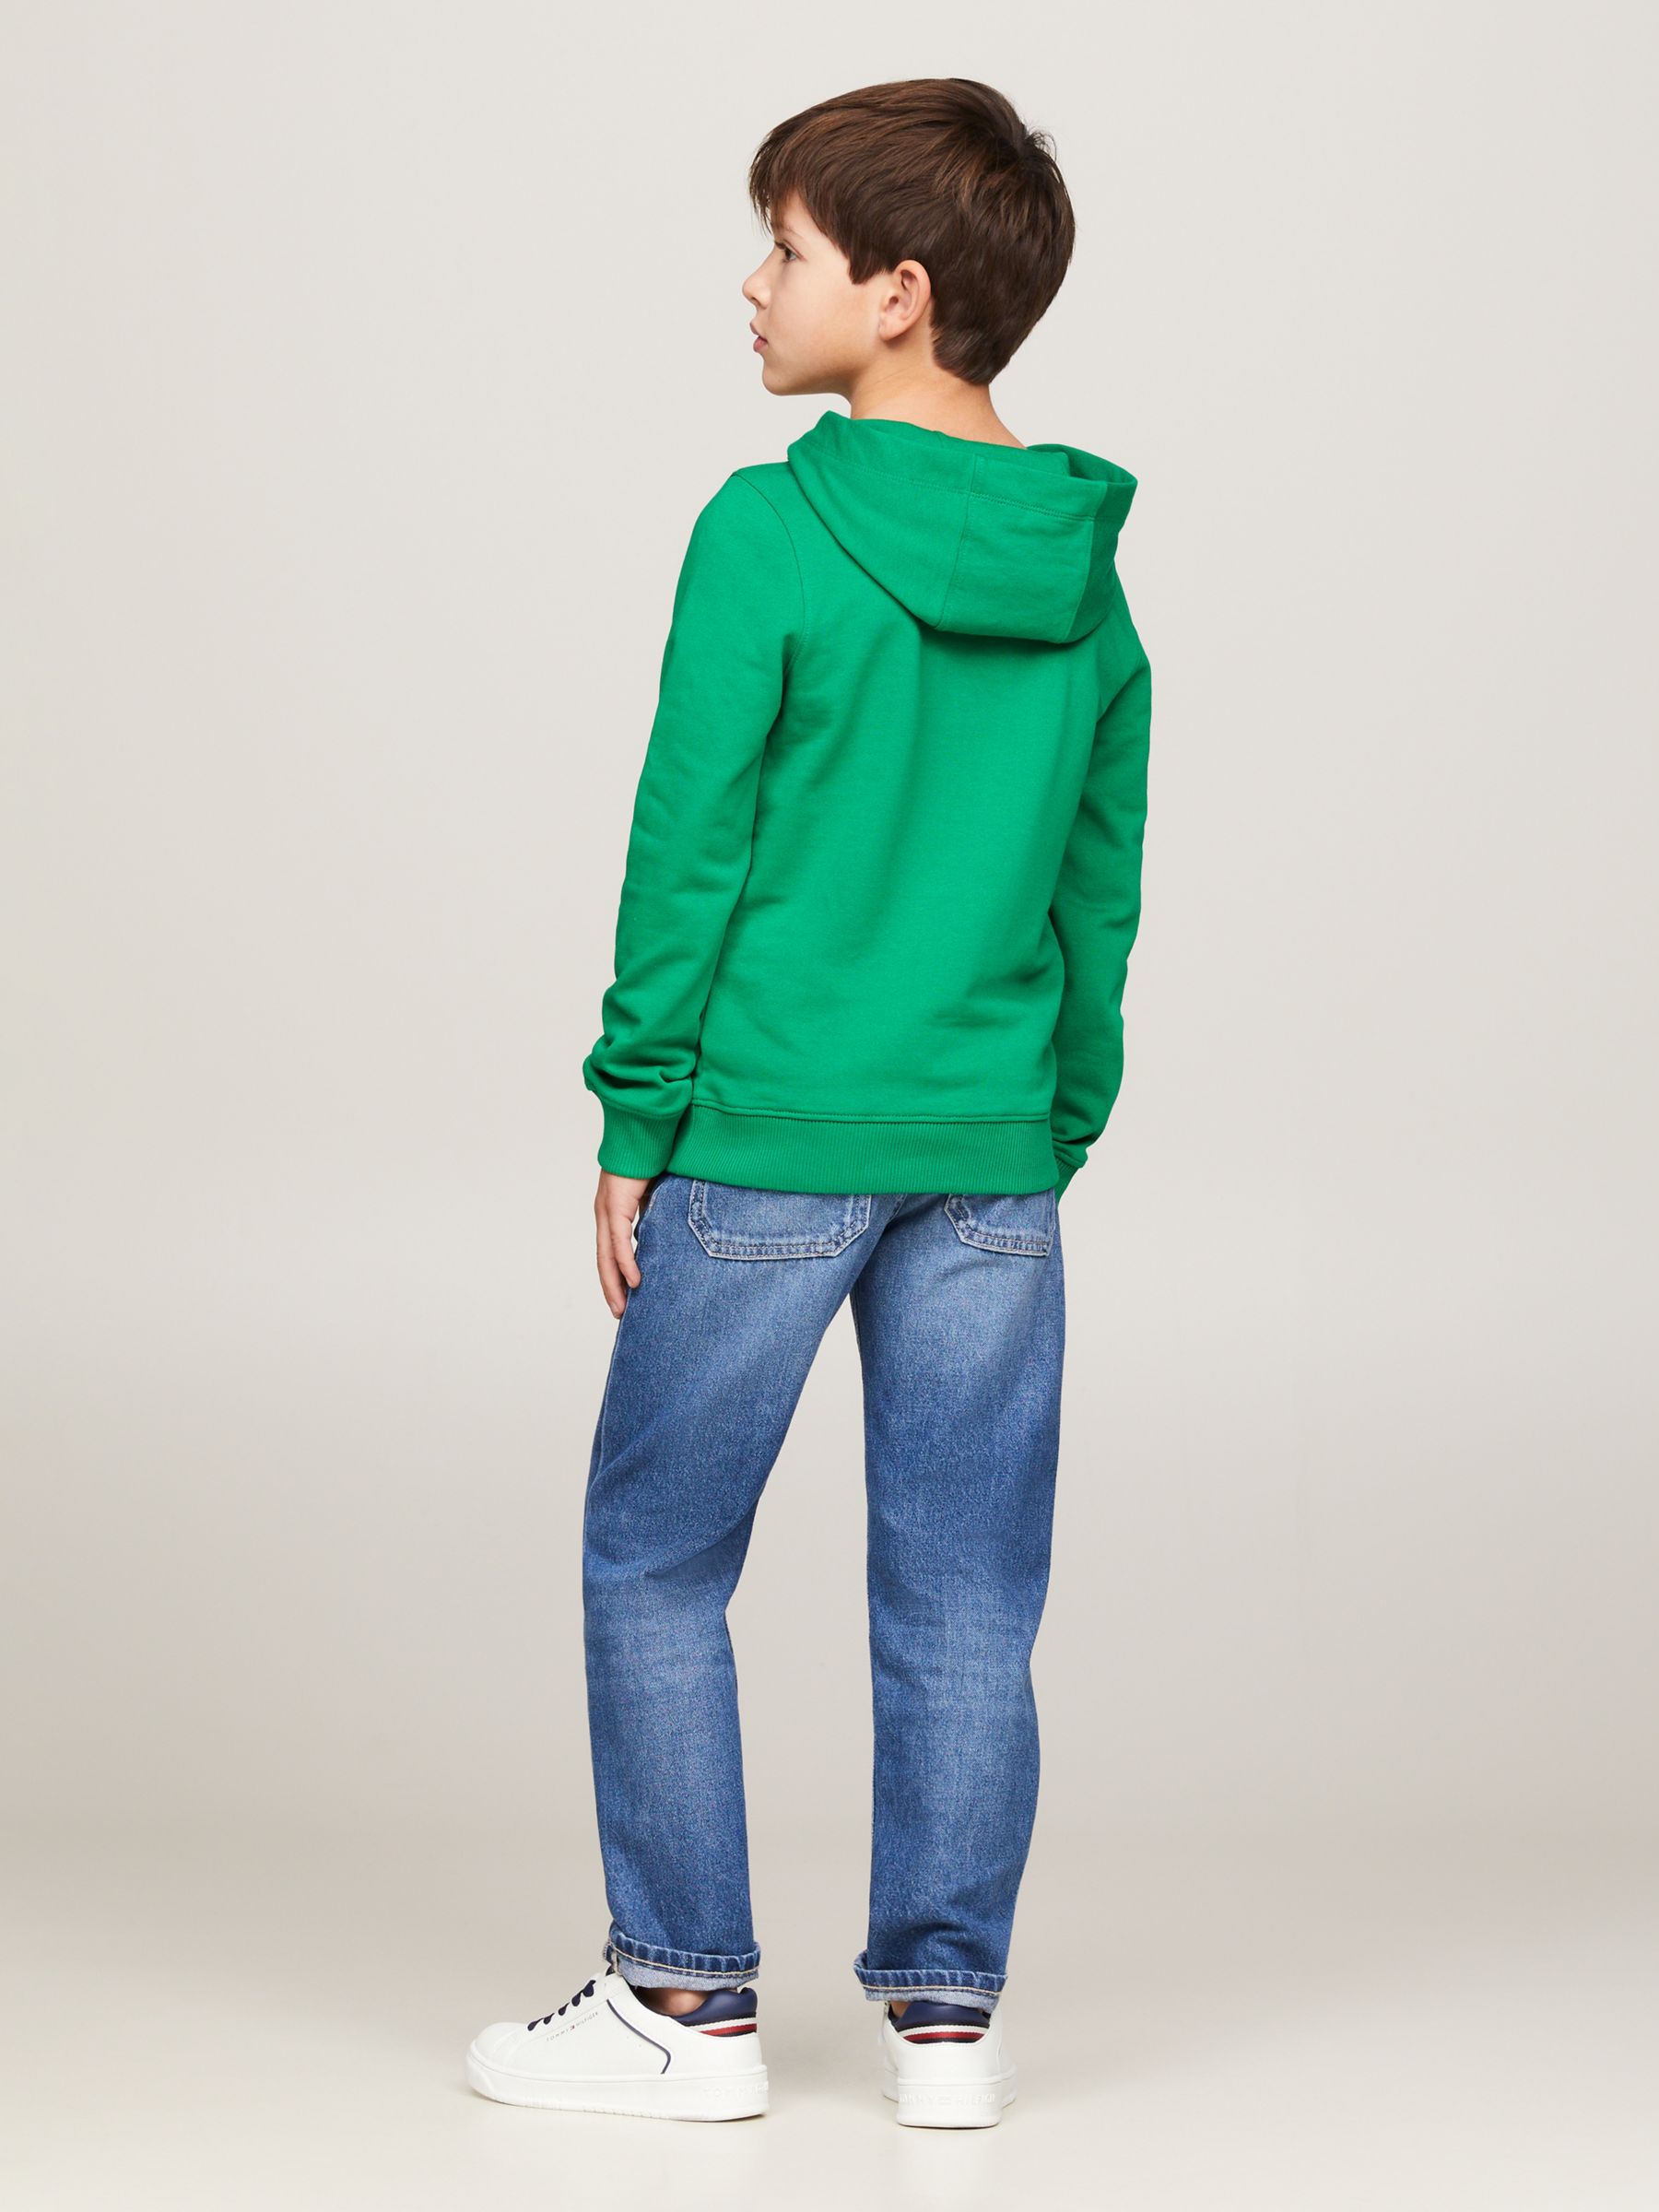 Buy Tommy Hilfiger Kids' Essential Pullover Hoodie Online at johnlewis.com